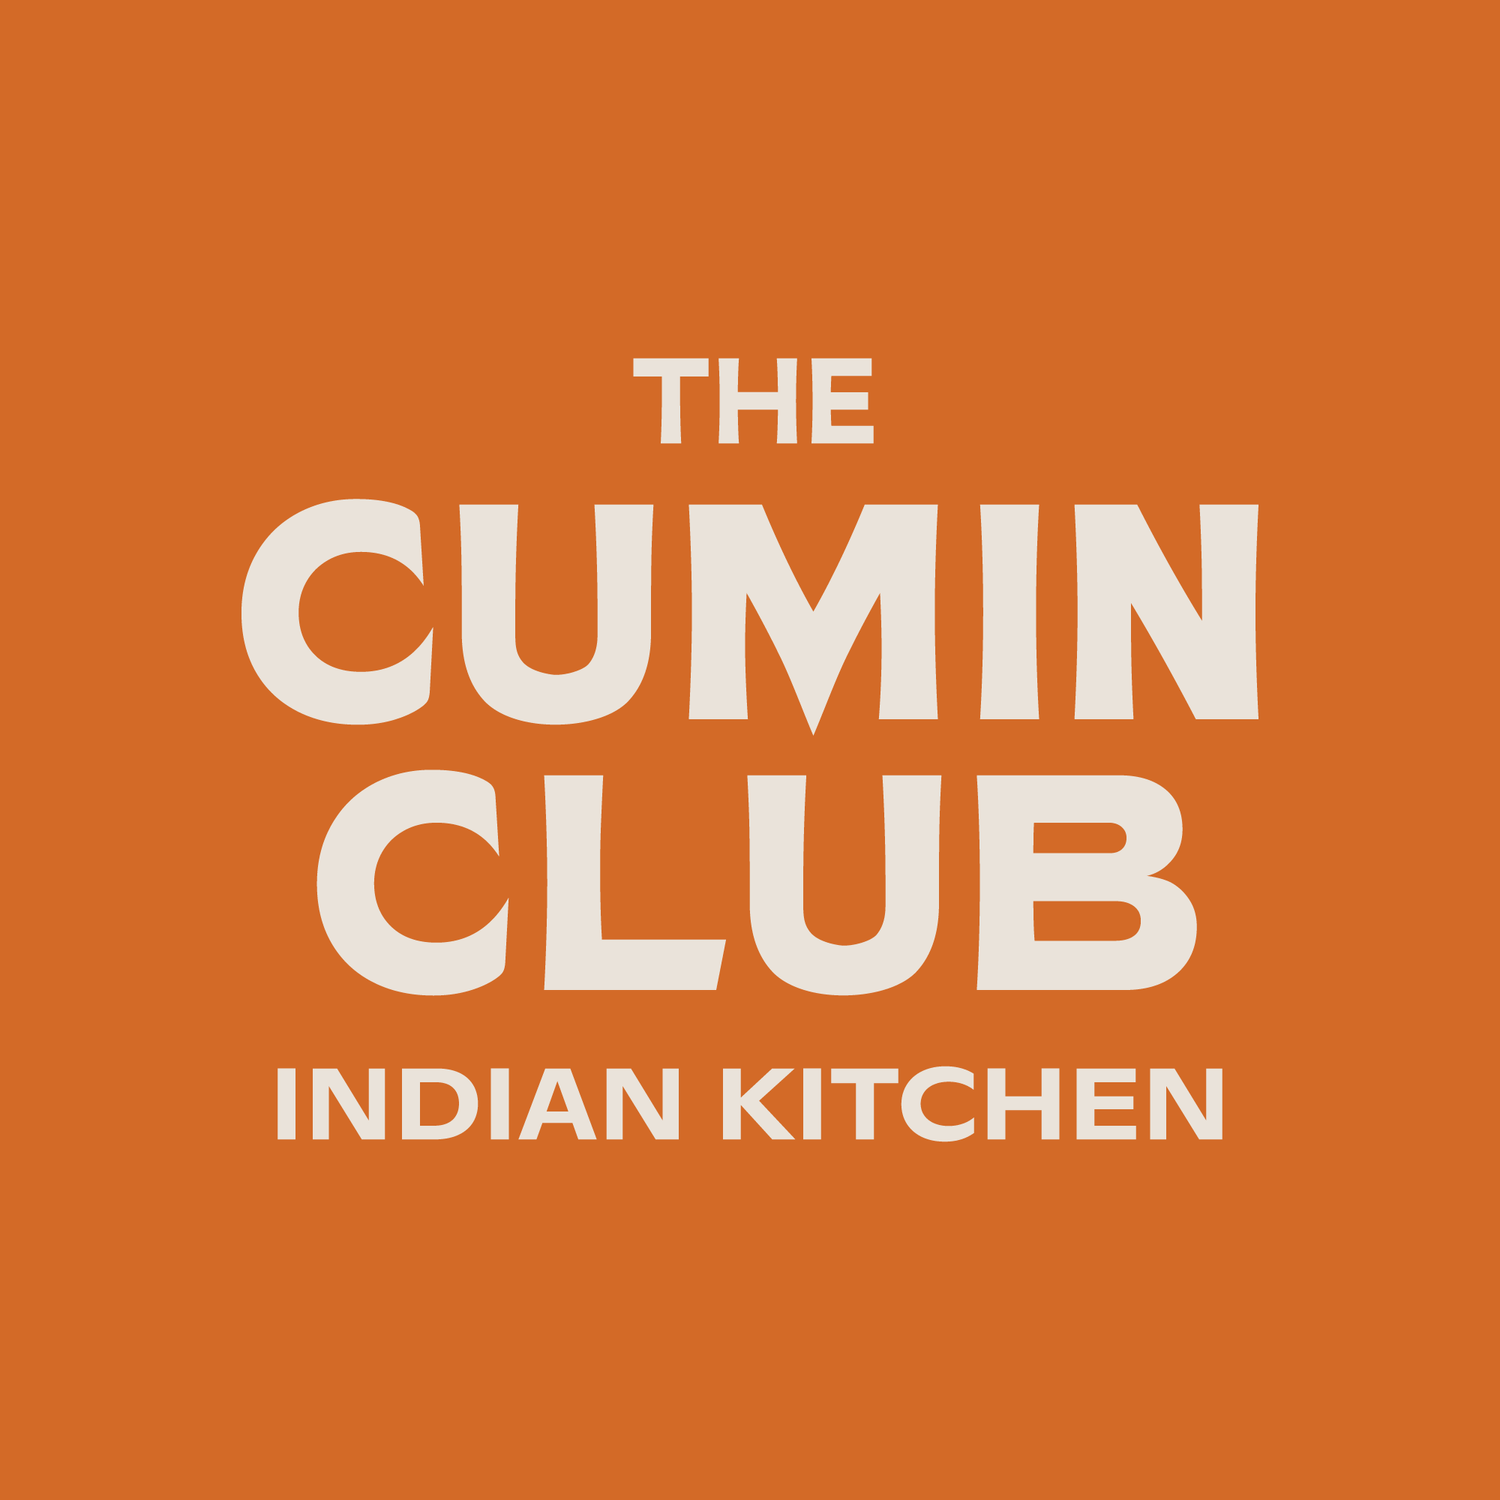 the cumin club indian kitchen